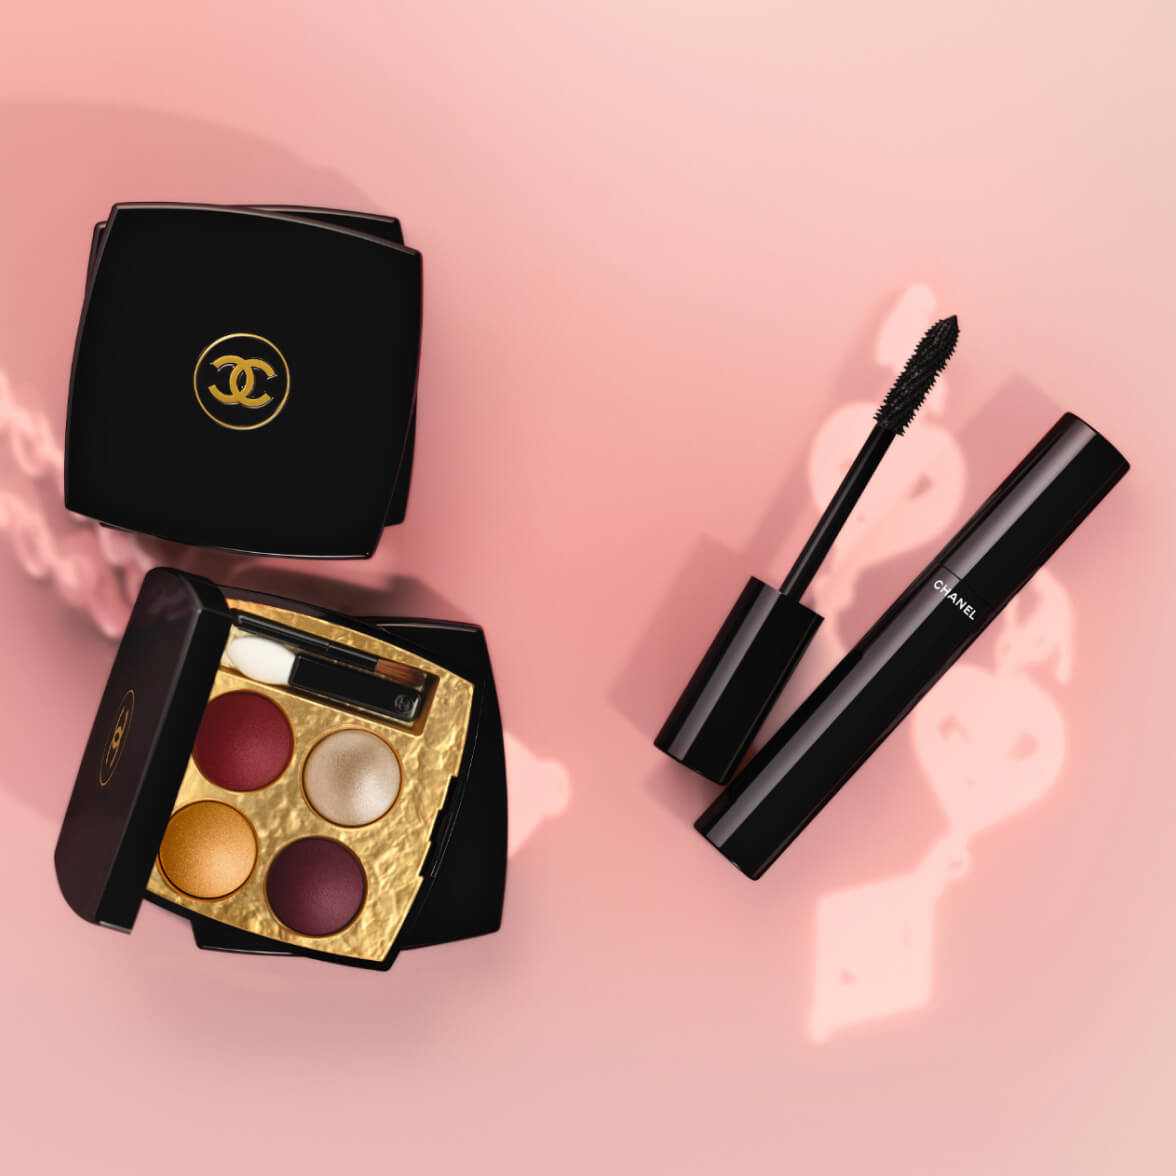 Indigo Kir Royale: Byzance de Chanel Makeup Review & Swatches